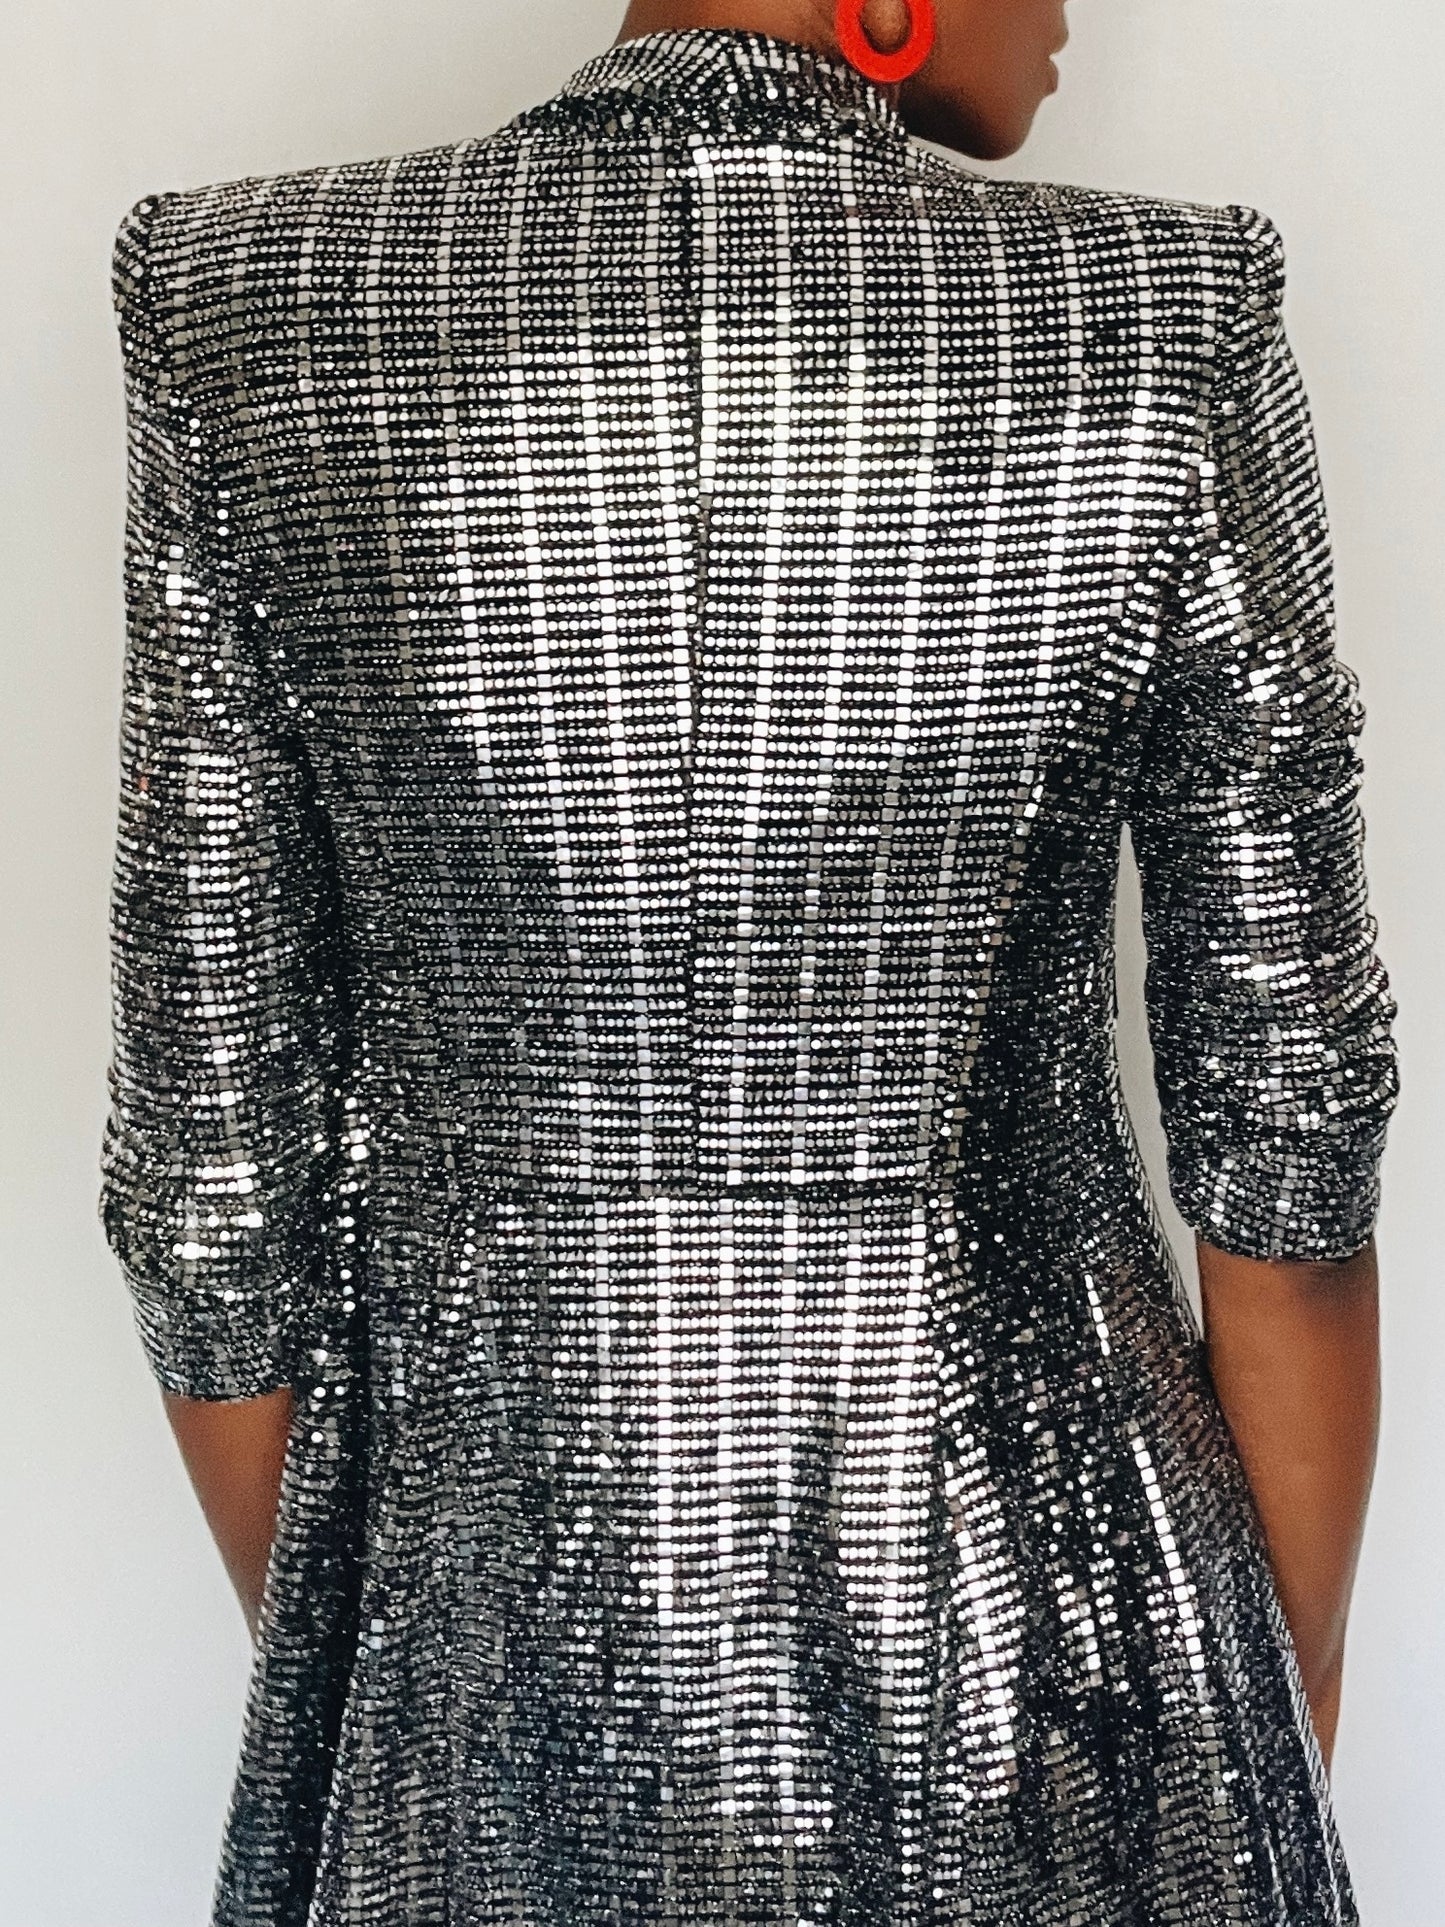 Zara Silver Sequin Blazer Dress